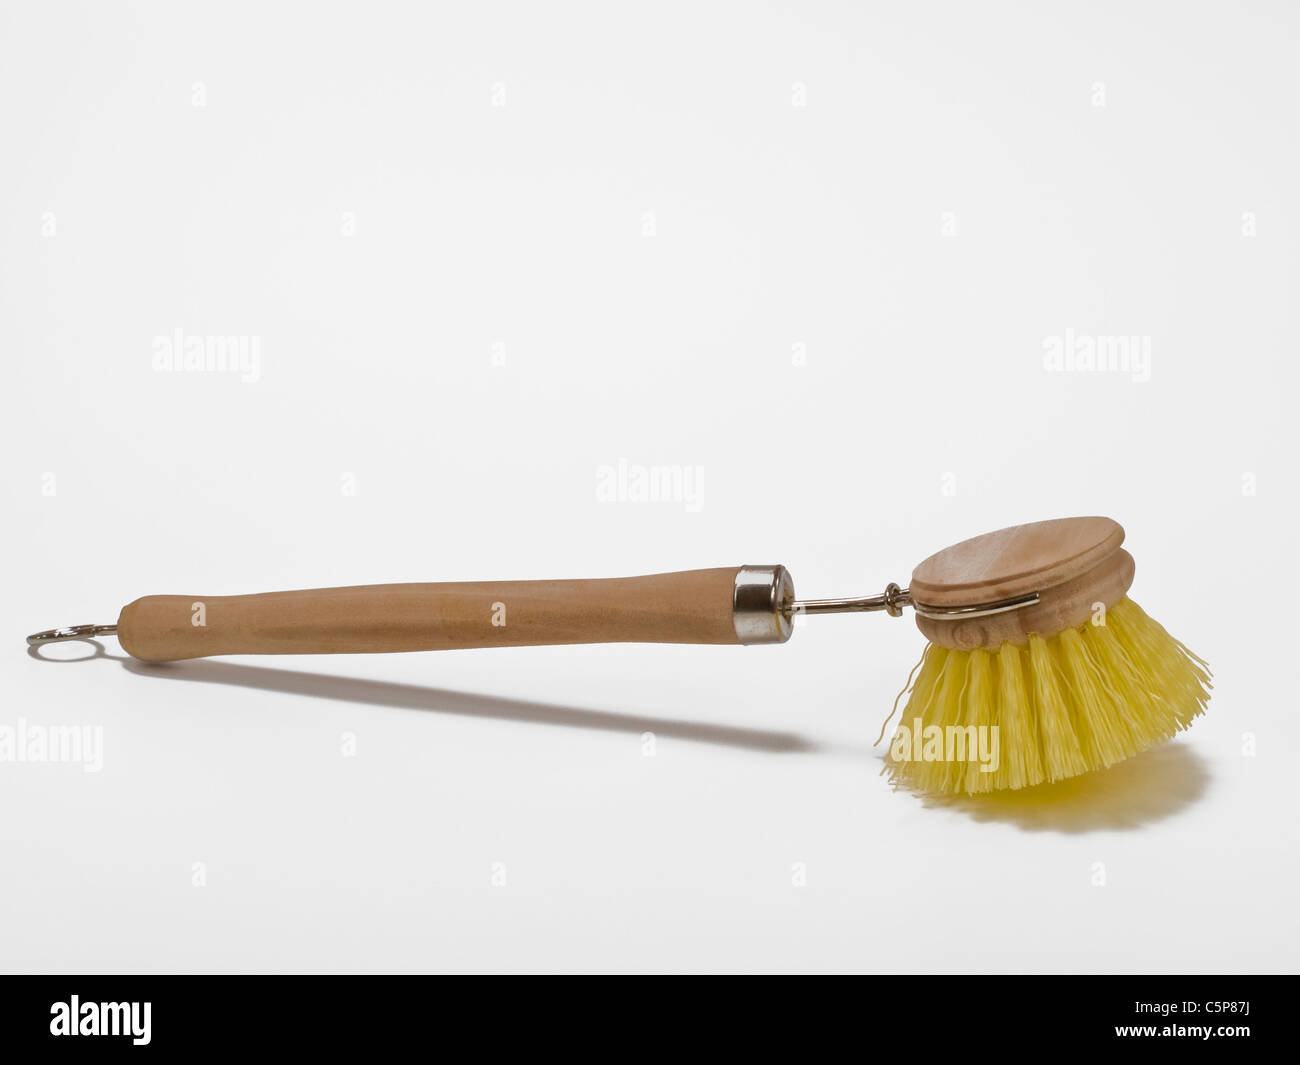 Detailansicht einer Haushaltsspülbürste | Dettaglio foto di una spazzola per lavare i piatti Foto Stock